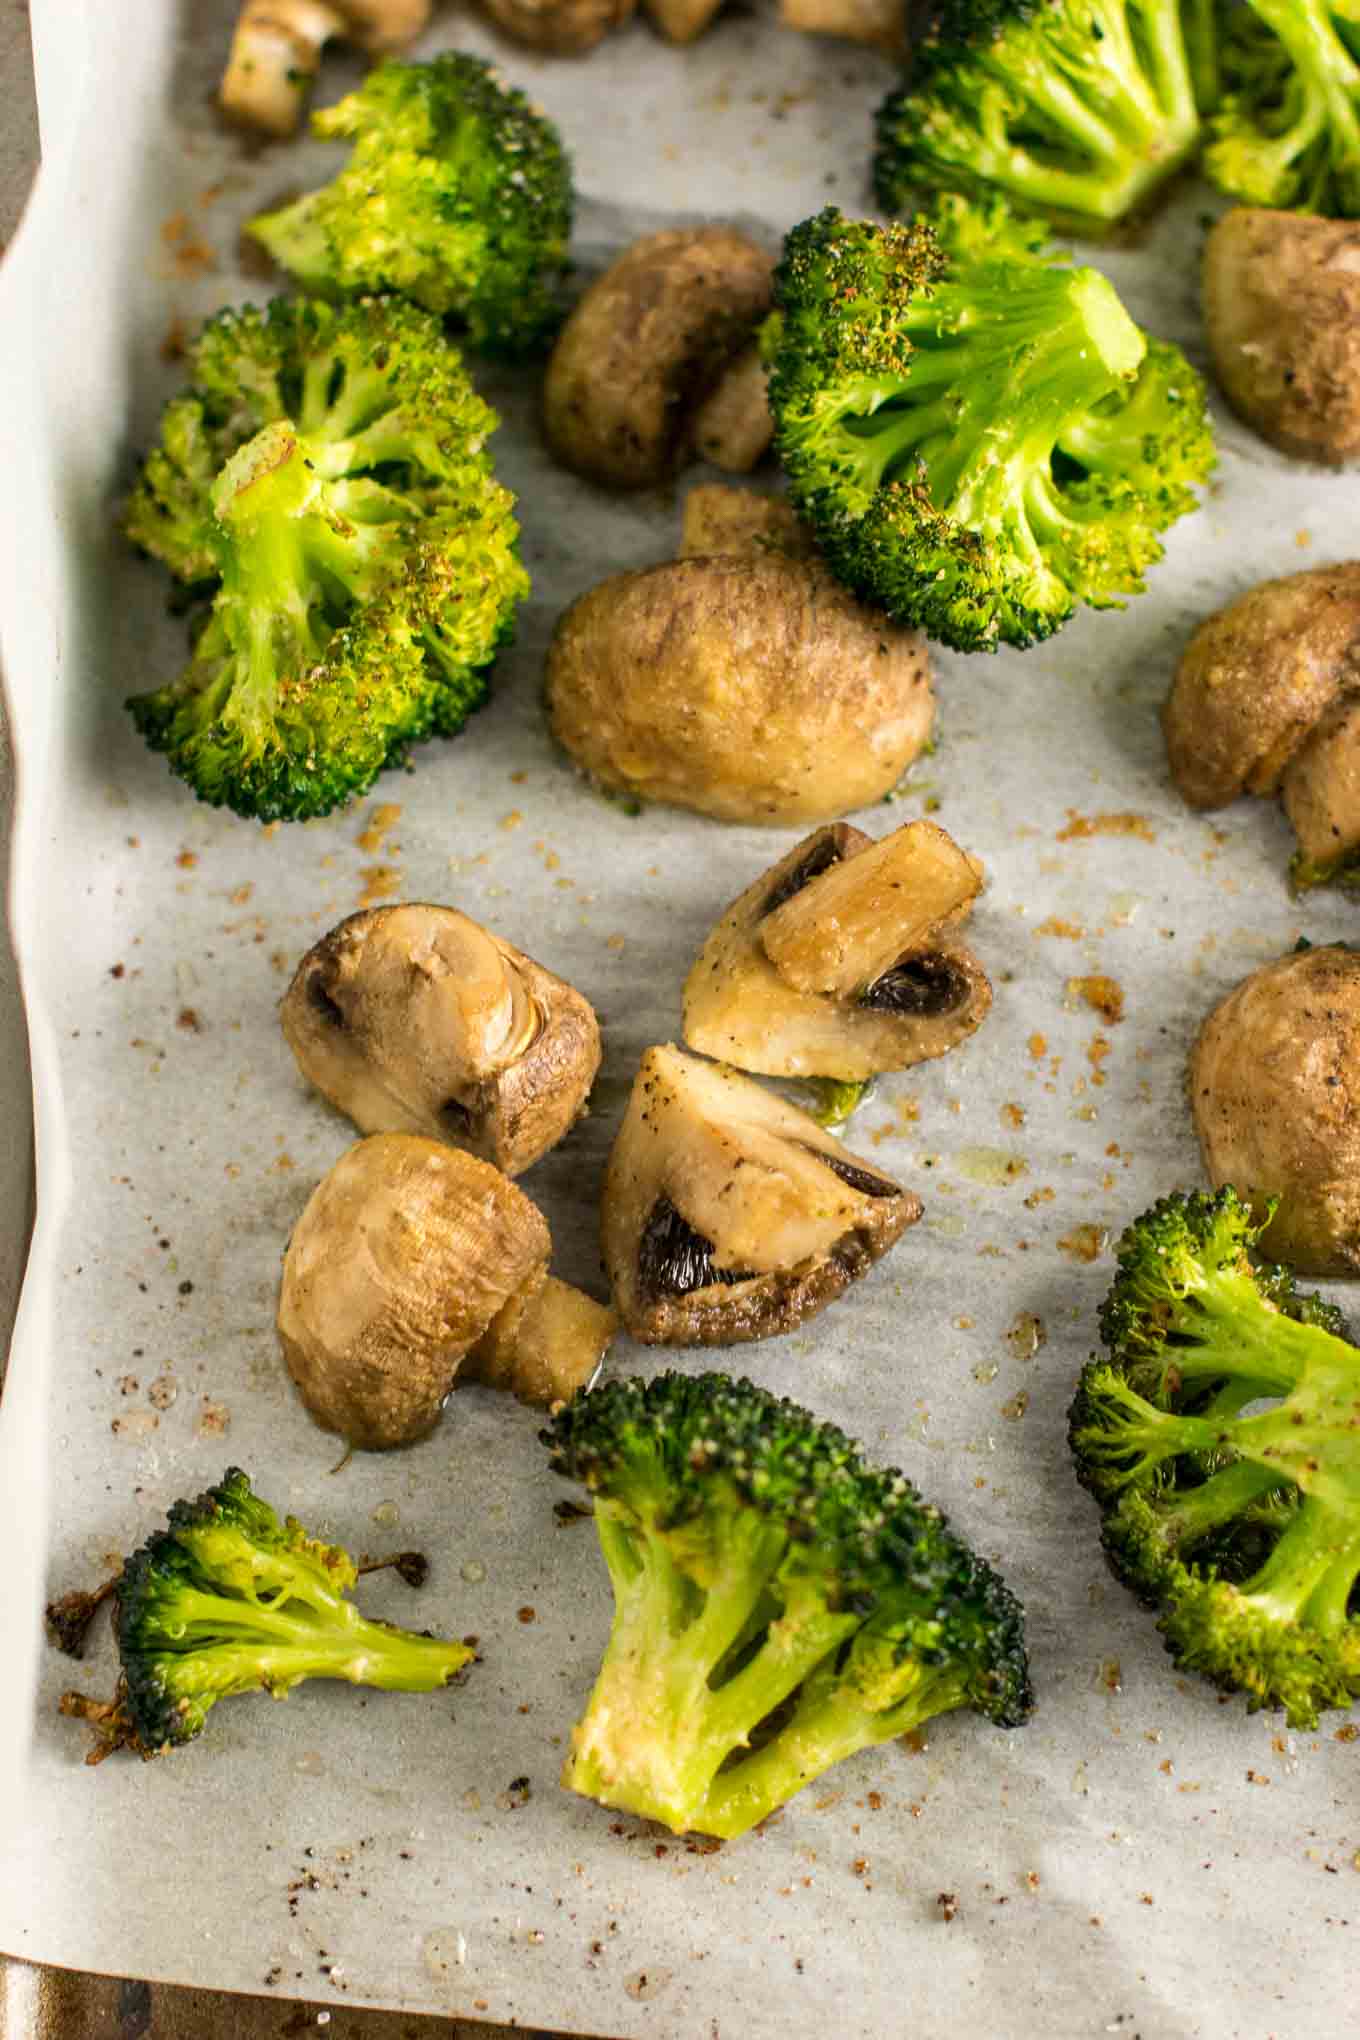 Roasted broccoli and mushrooms recipe - easy side dish! This was so easy and really good. We will be making it a lo! #broccoliandmushrooms #vegan #sidedish #dinner #glutenfree #broccoli #mushrooms #easysidedish #mushrooms